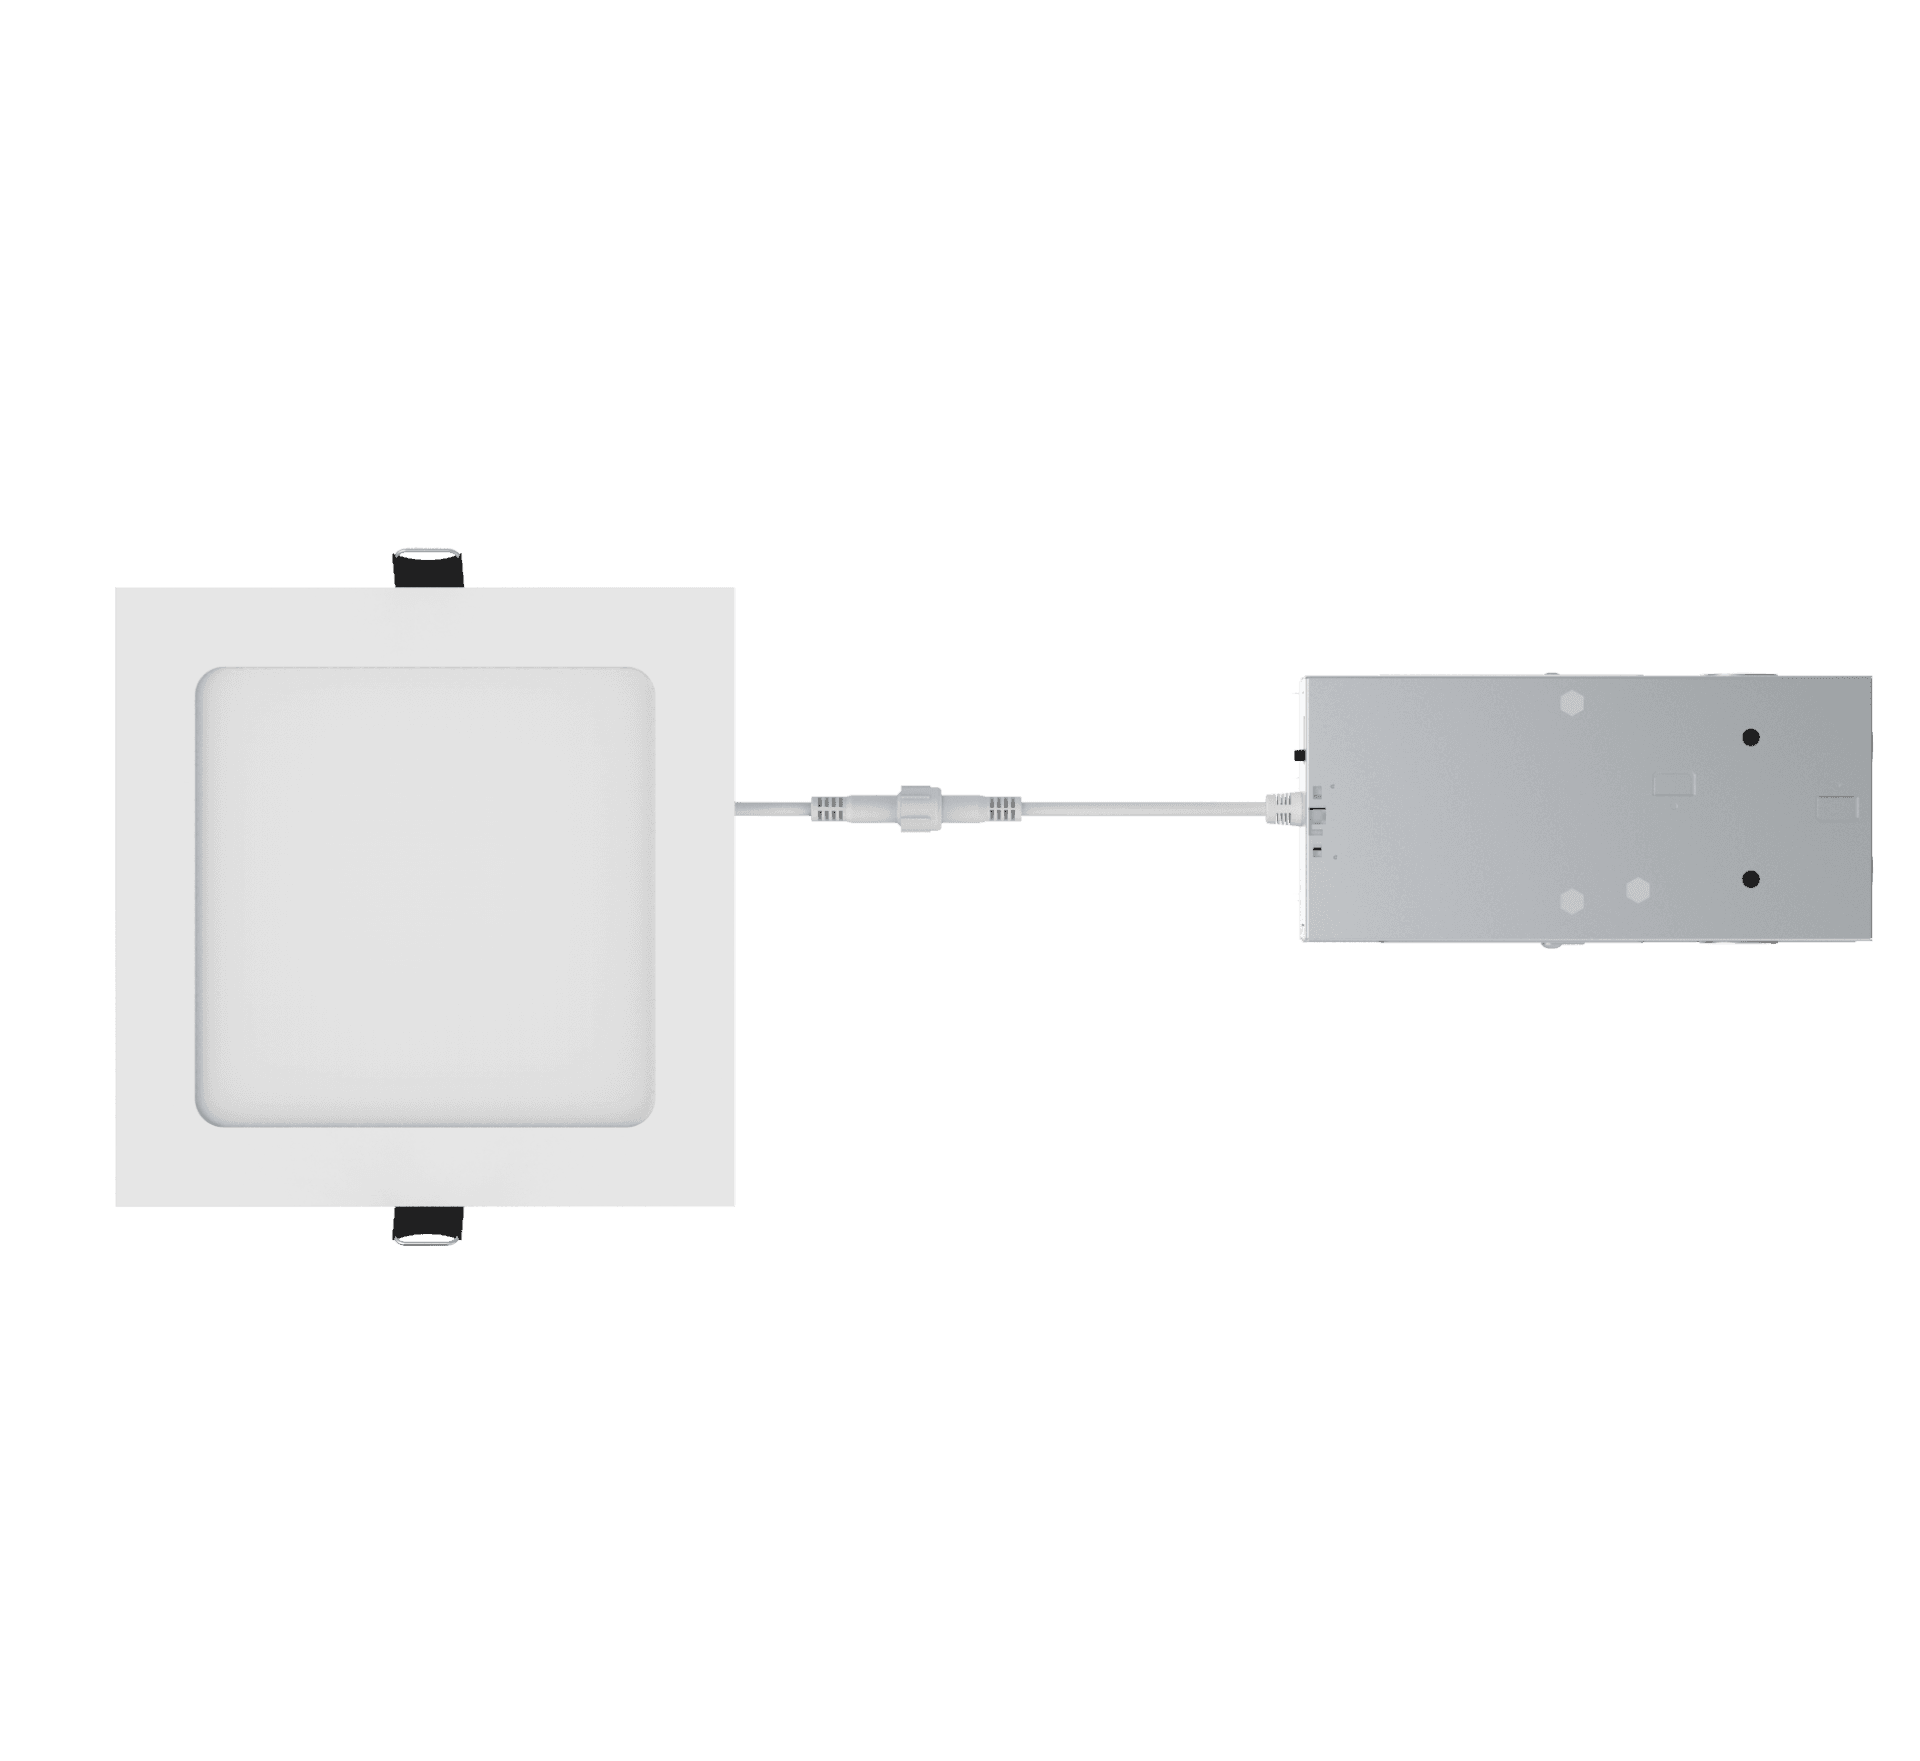 SDS Square 6 inch LED light fixture